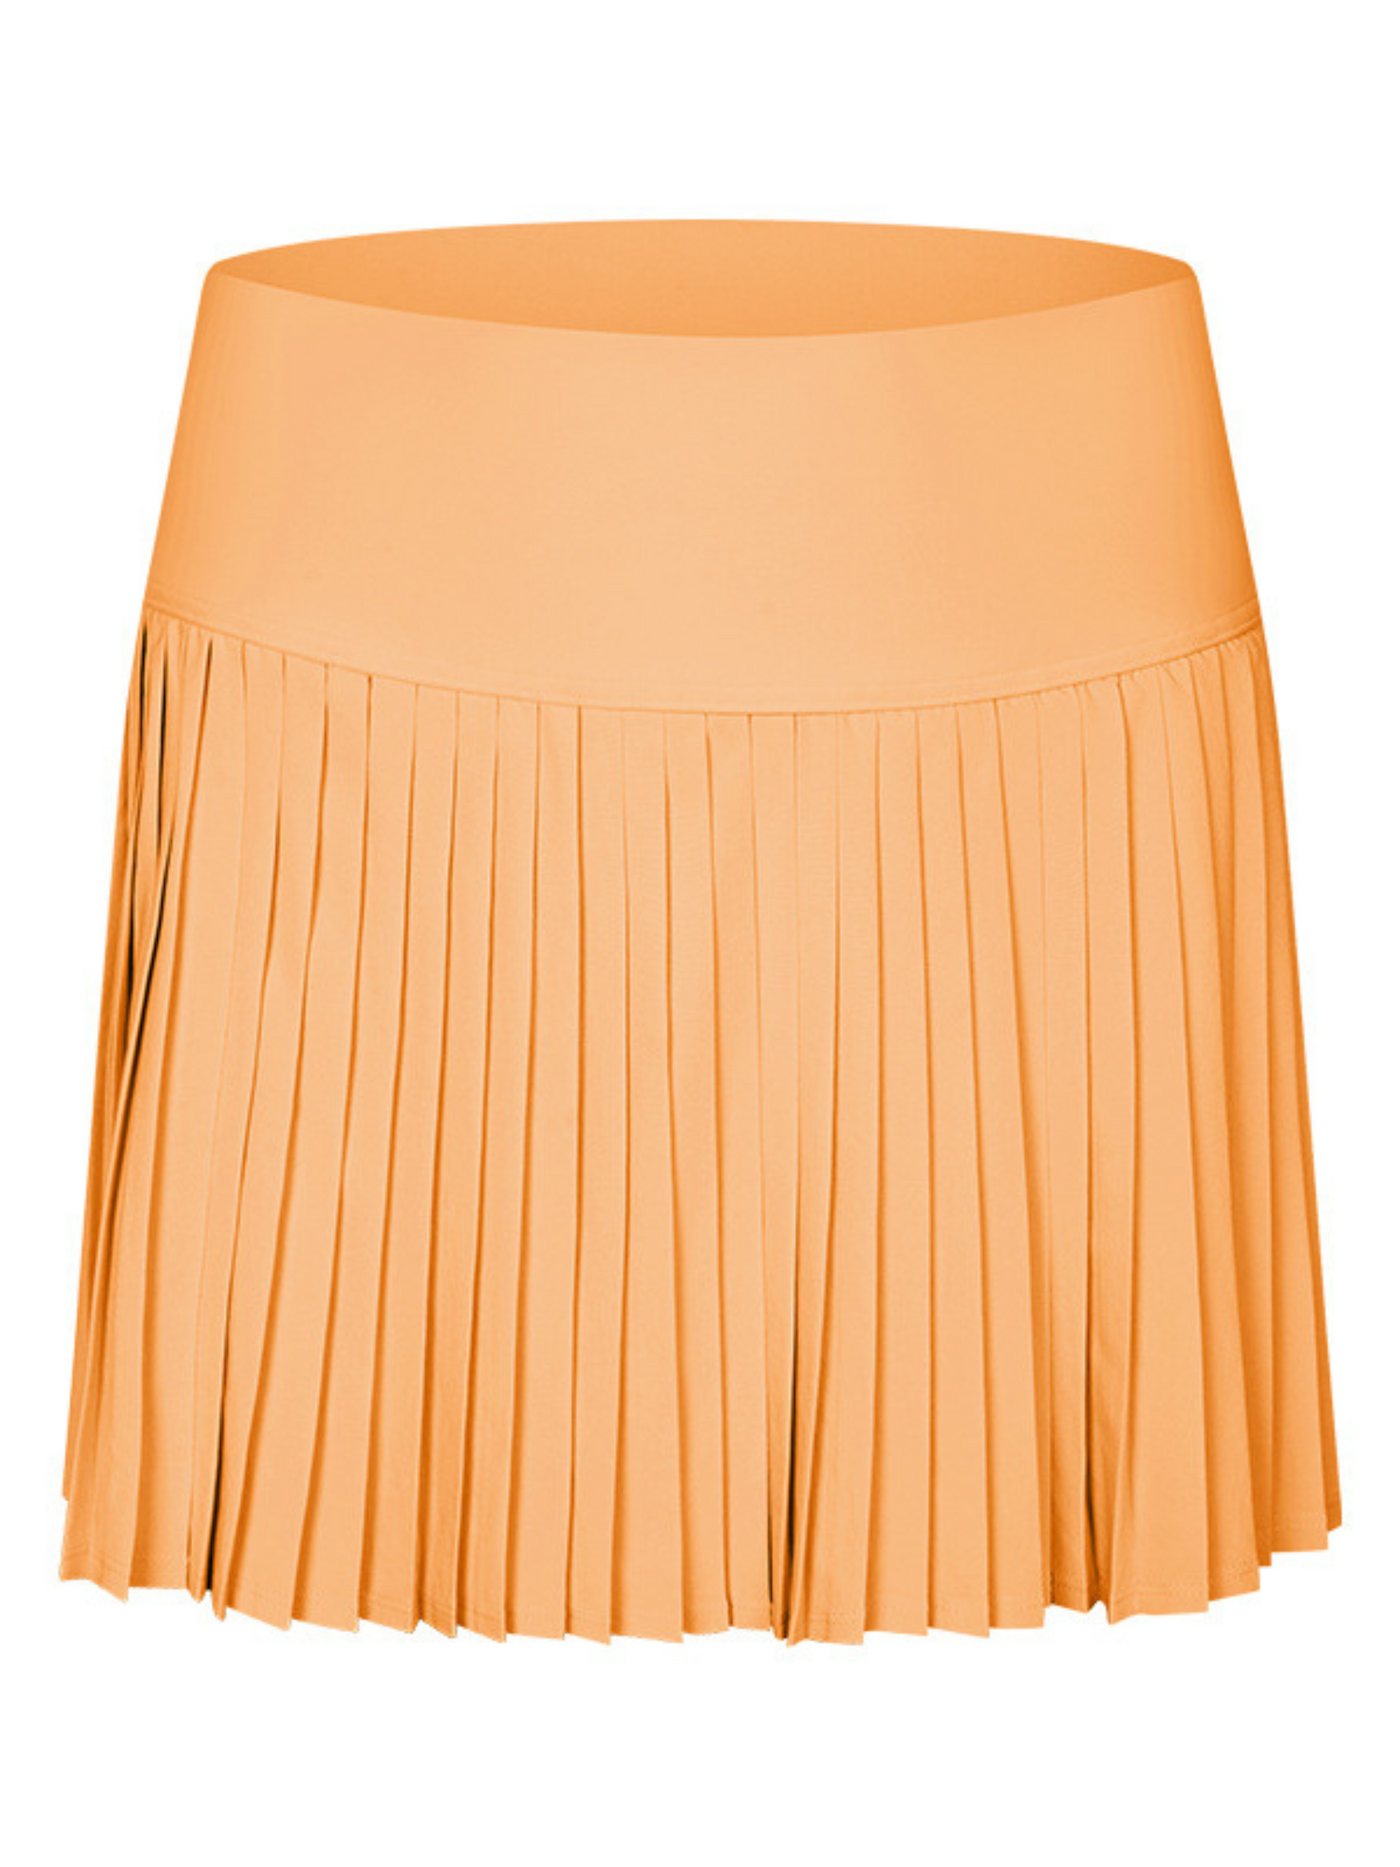 Tangerine Orange Navalora Fit Active Skirt with Shorts liner 